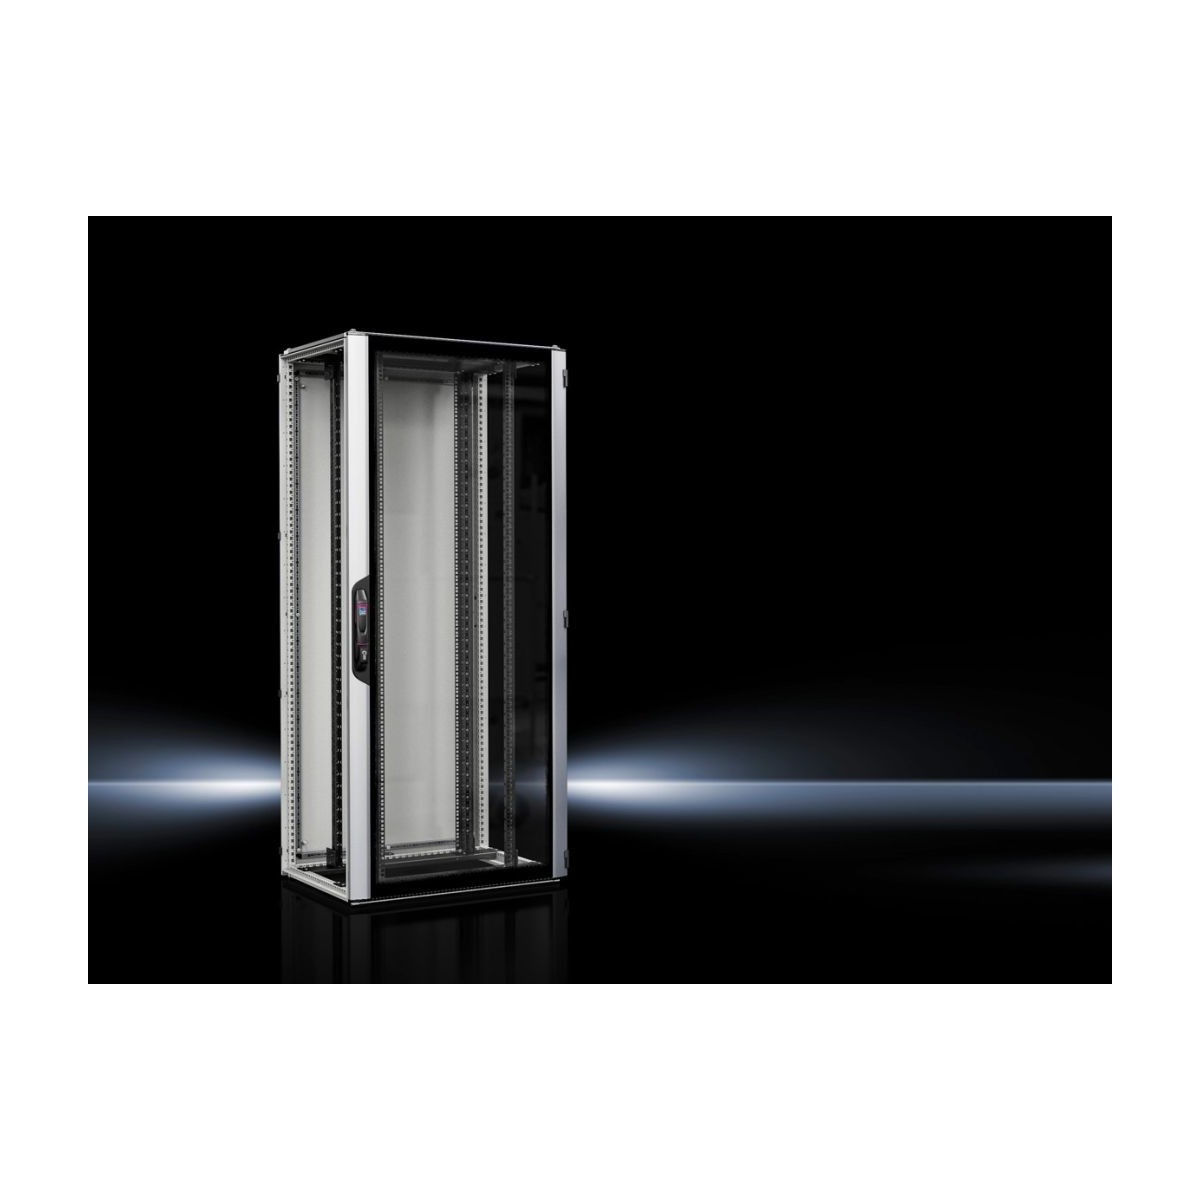 Rittal 5309.136 - 42U - Freestanding rack - 1500 kg - Black - Gray - Aluminum - Steel - Toughened glass - Steel